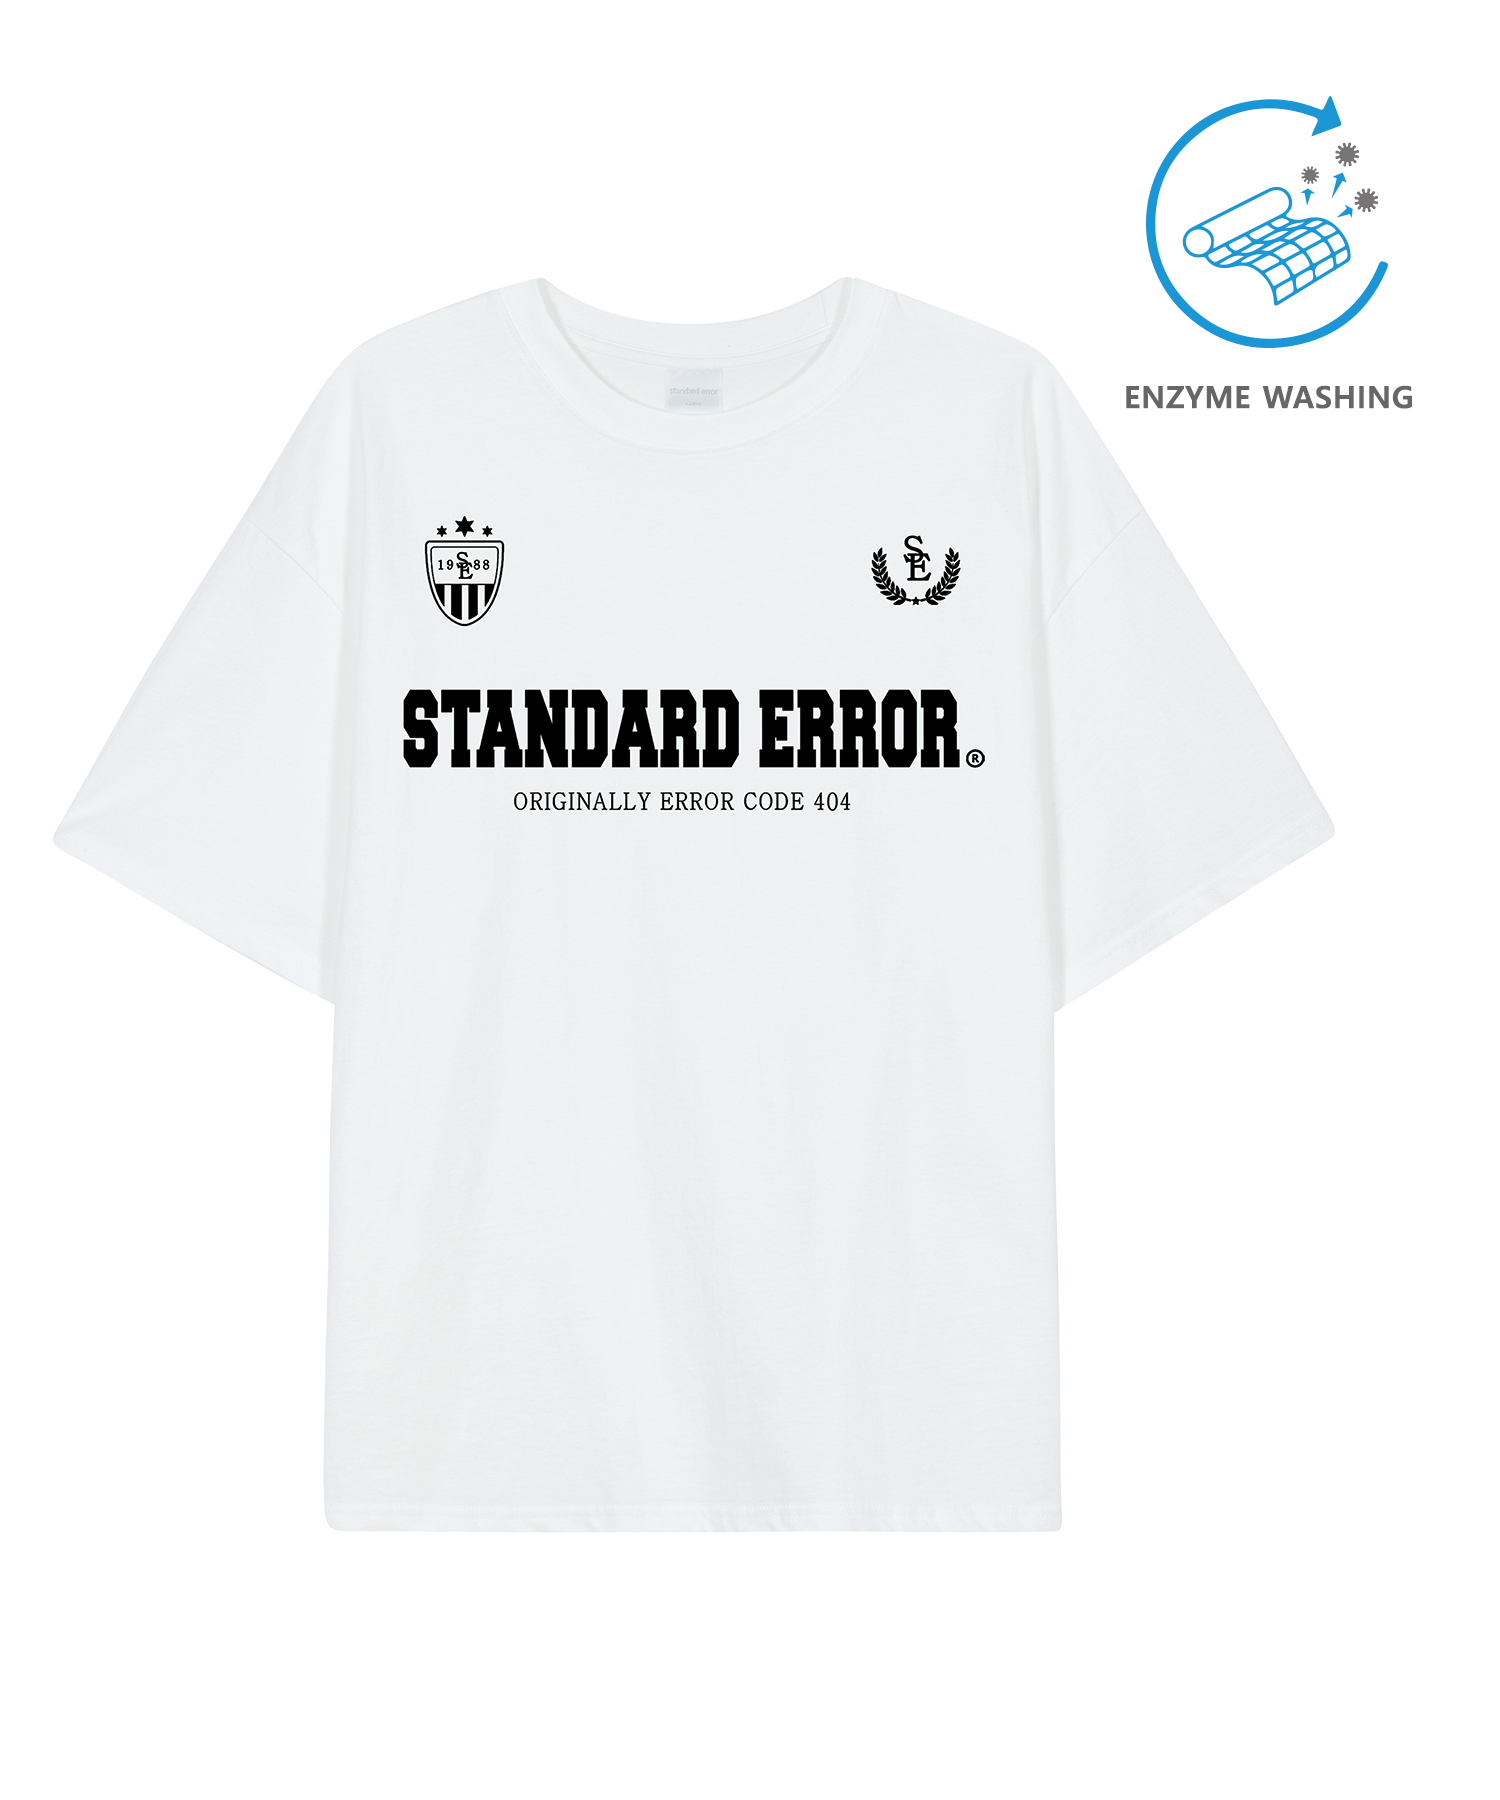 IRT165 [Compact YAN] Enzaim Washing Old School Sporty Emblem Short-sleeved T-shirt White